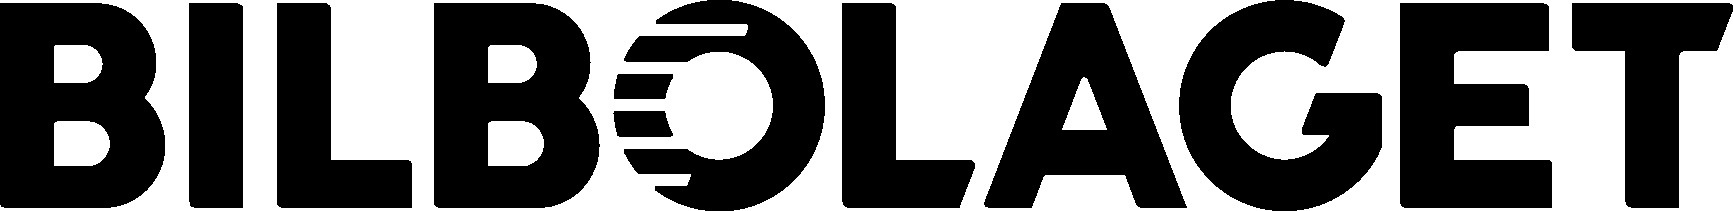 Bilbolaget-Logo-med streck.jpg